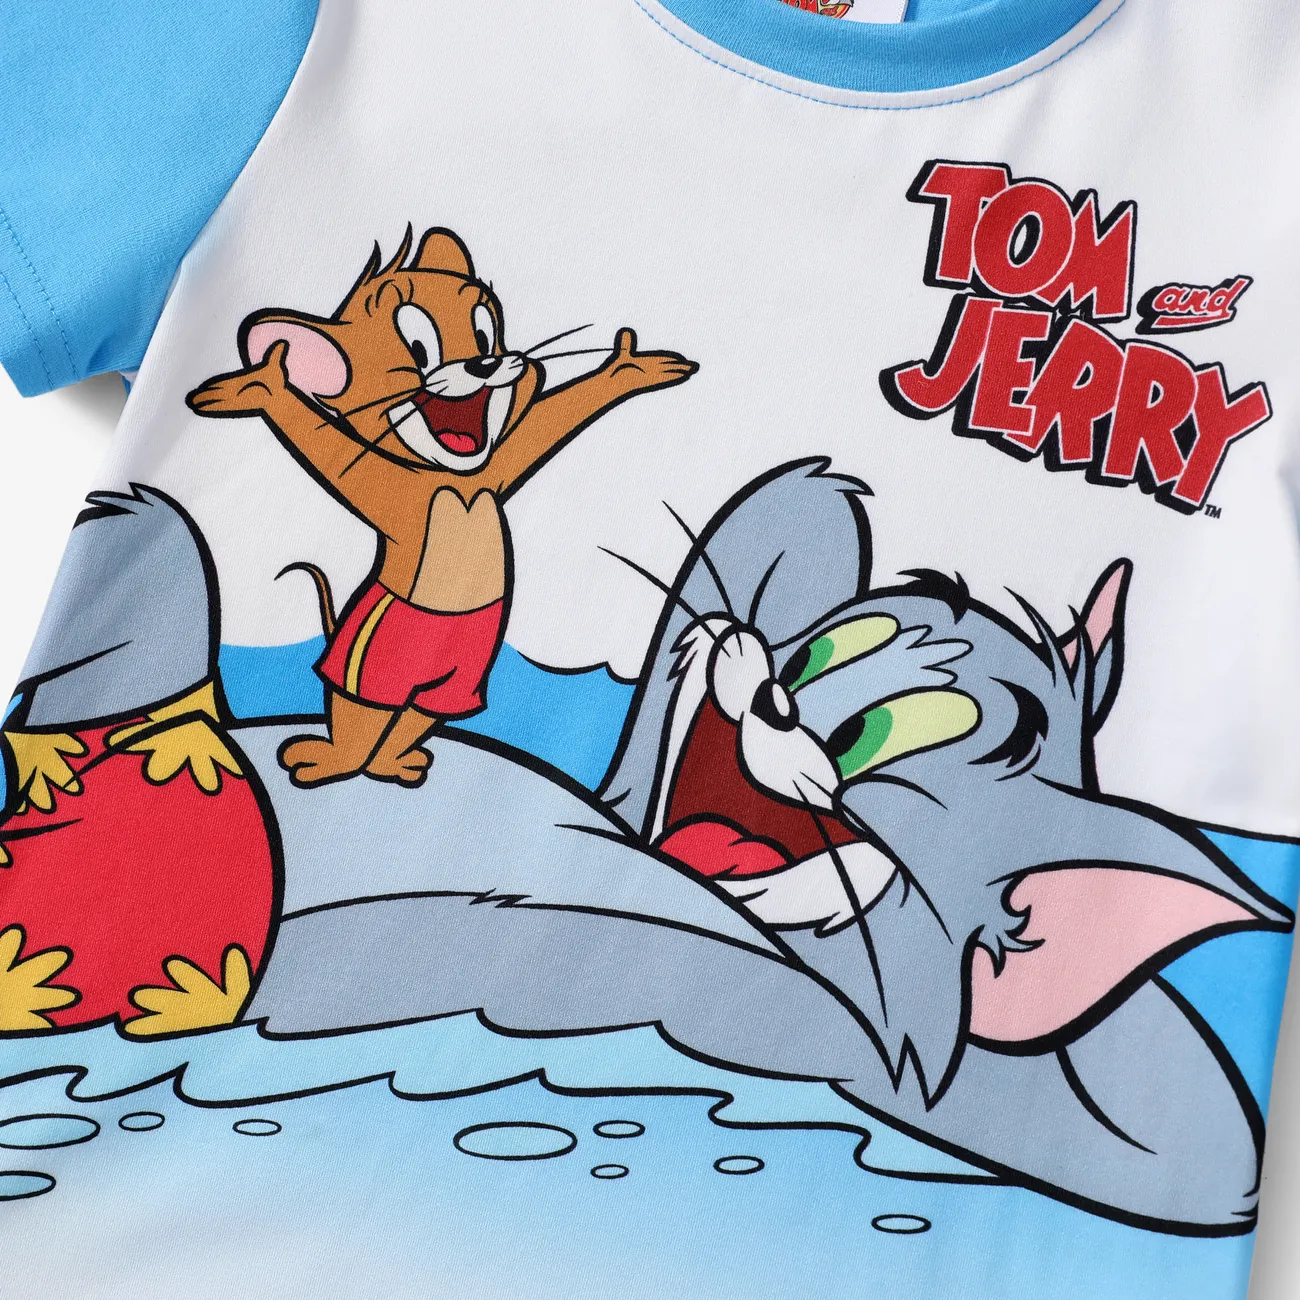 Tom and Jerry Toddler Kids 2pcs Gradient Beach Print T-shirt with Short Set Blue big image 1